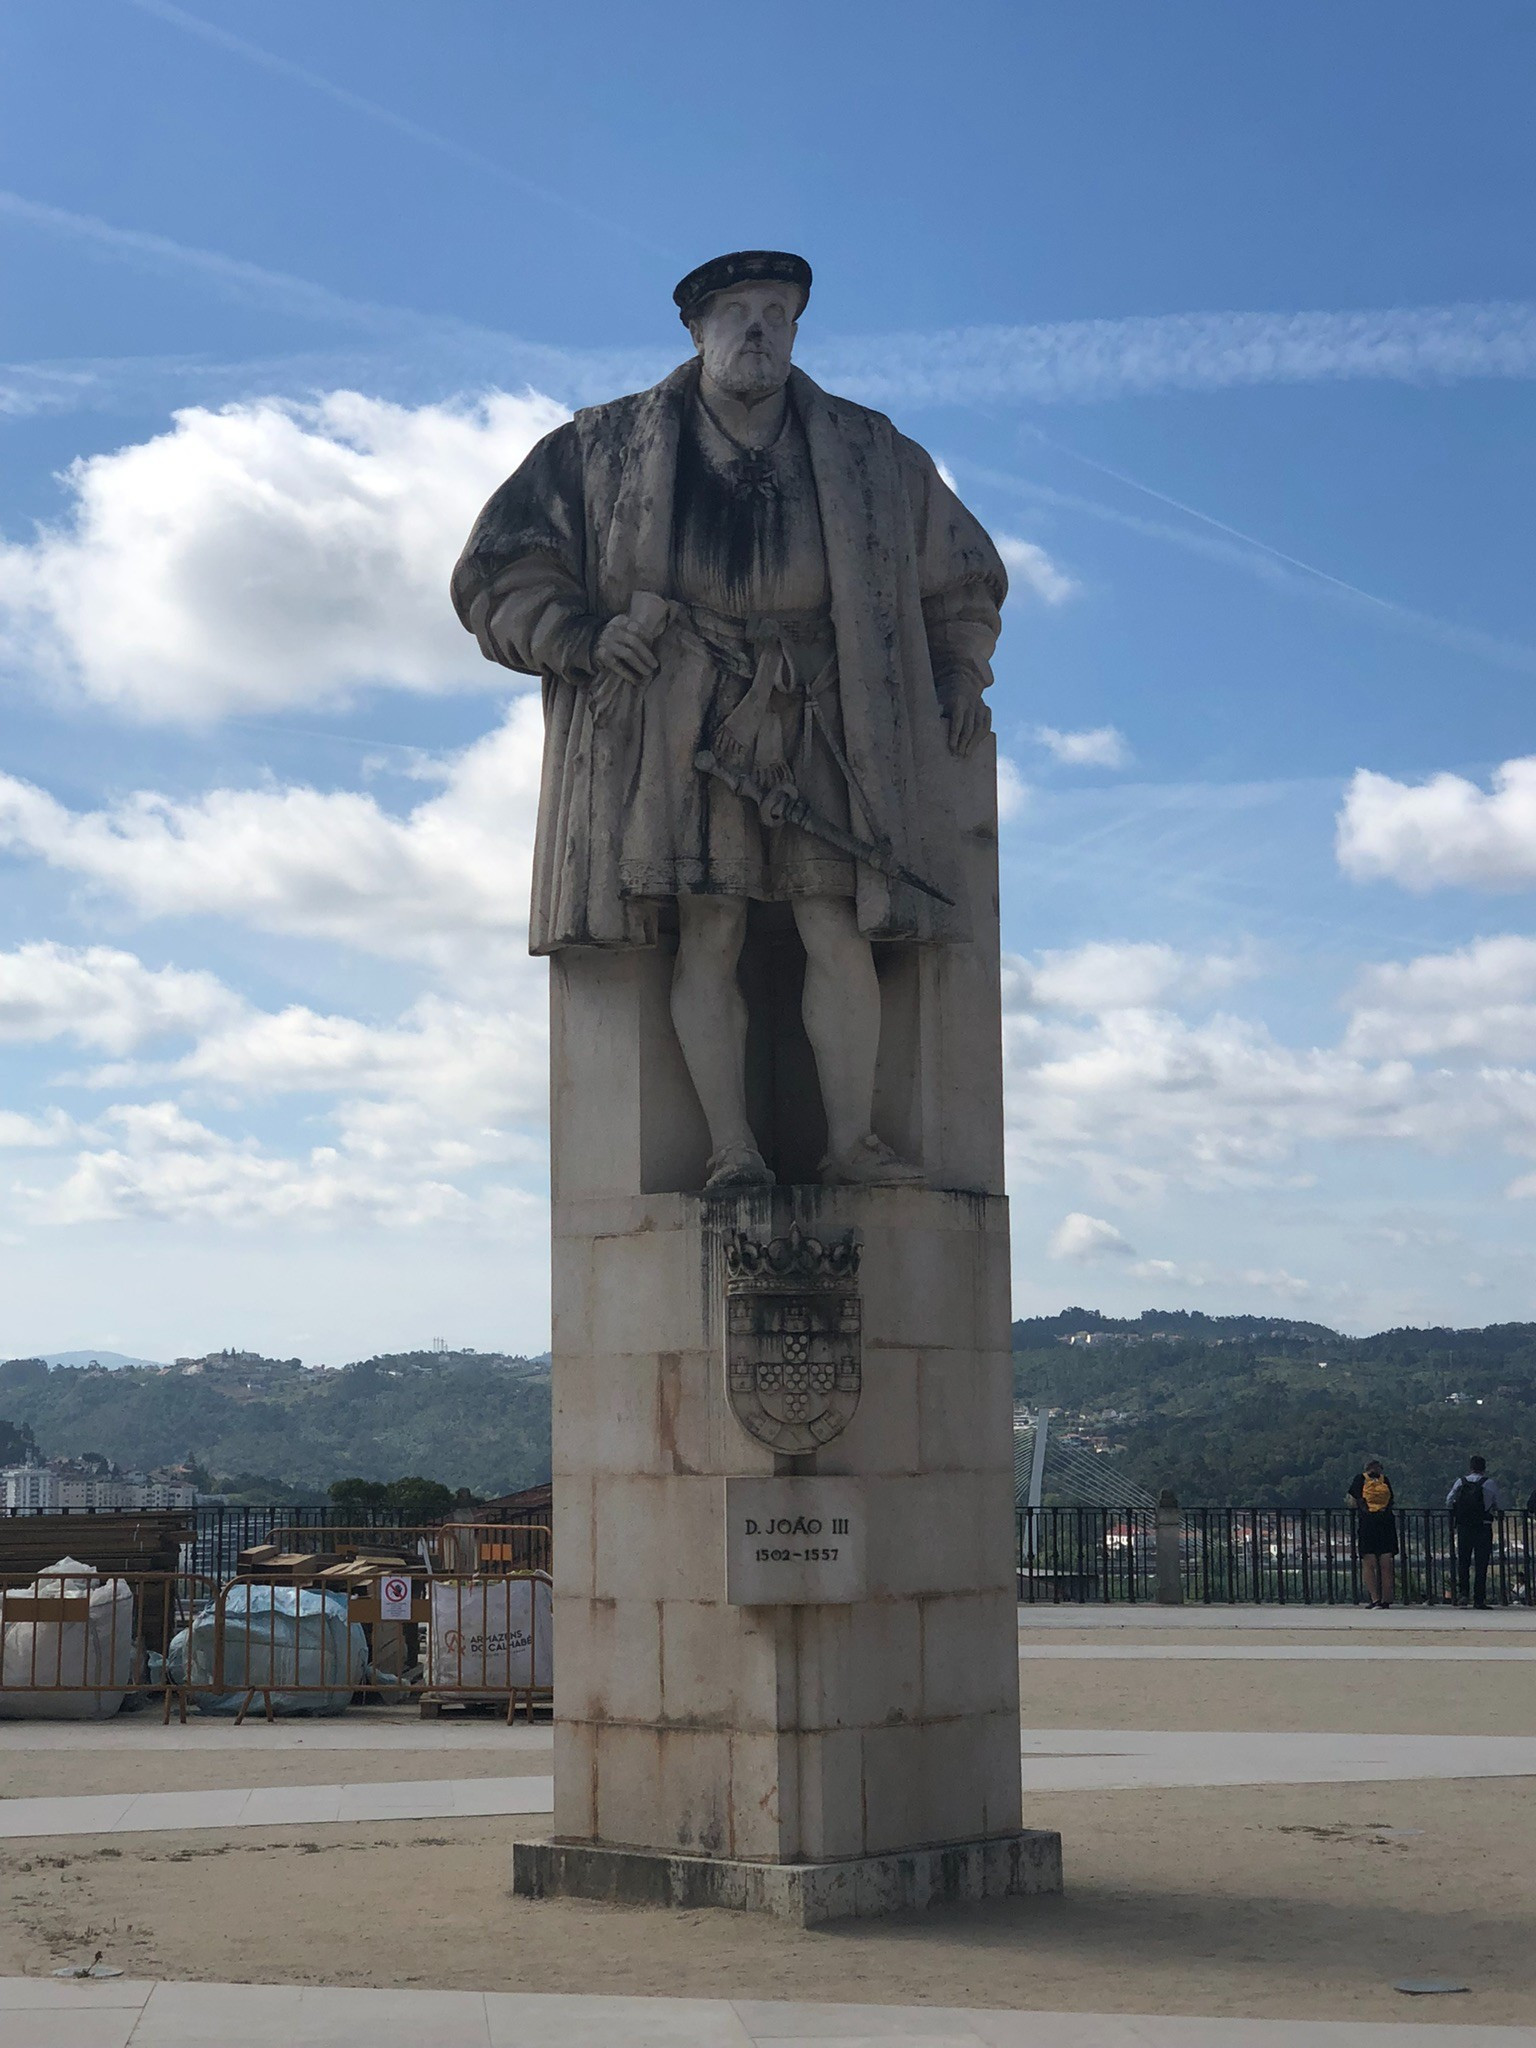 Statue of Don Juan III, Portugal